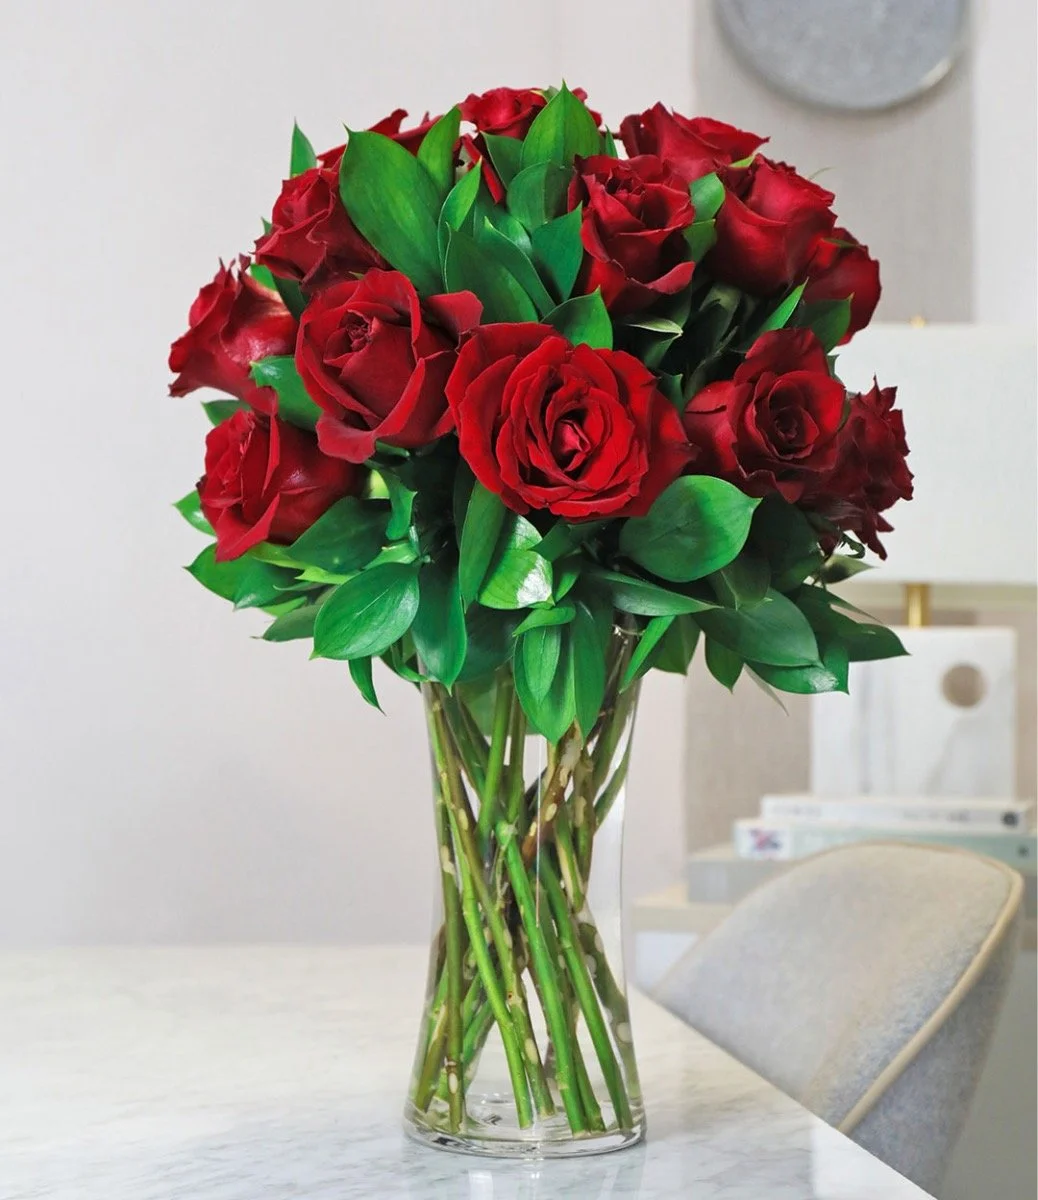 24 Roses in a Vase*